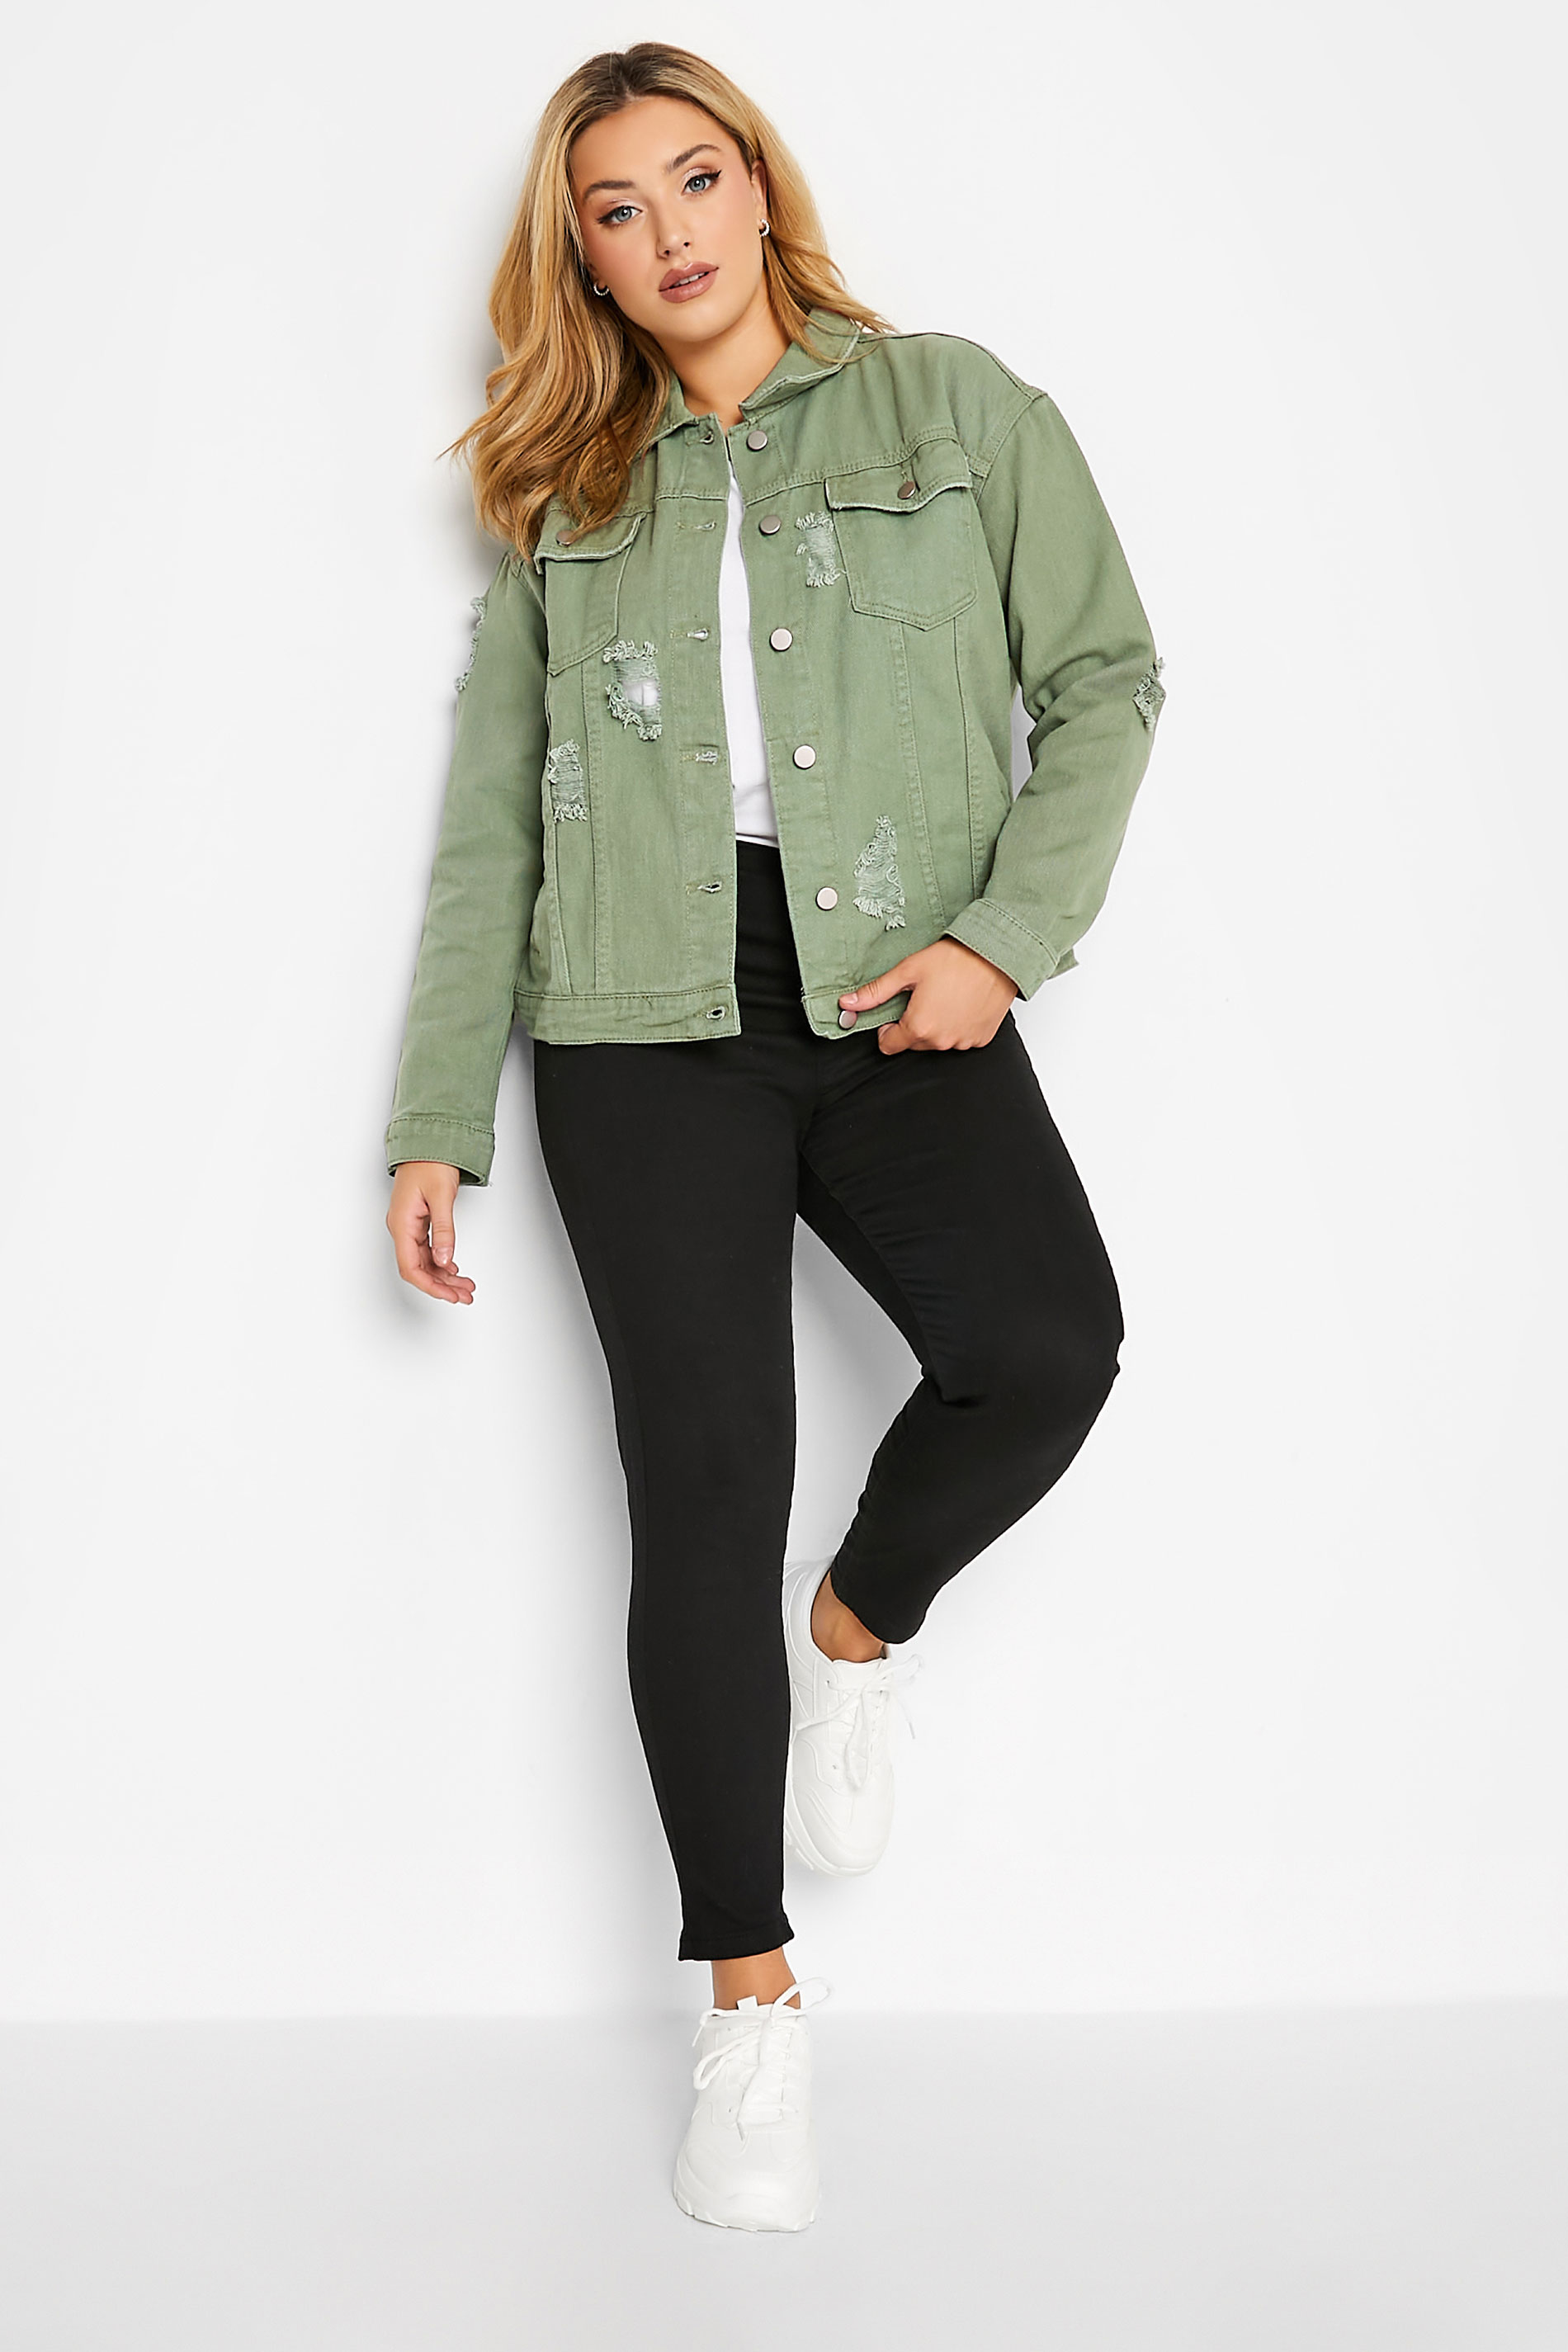 Plus Size Khaki Green Distressed Western Denim Jacket | Yours Clothing 2